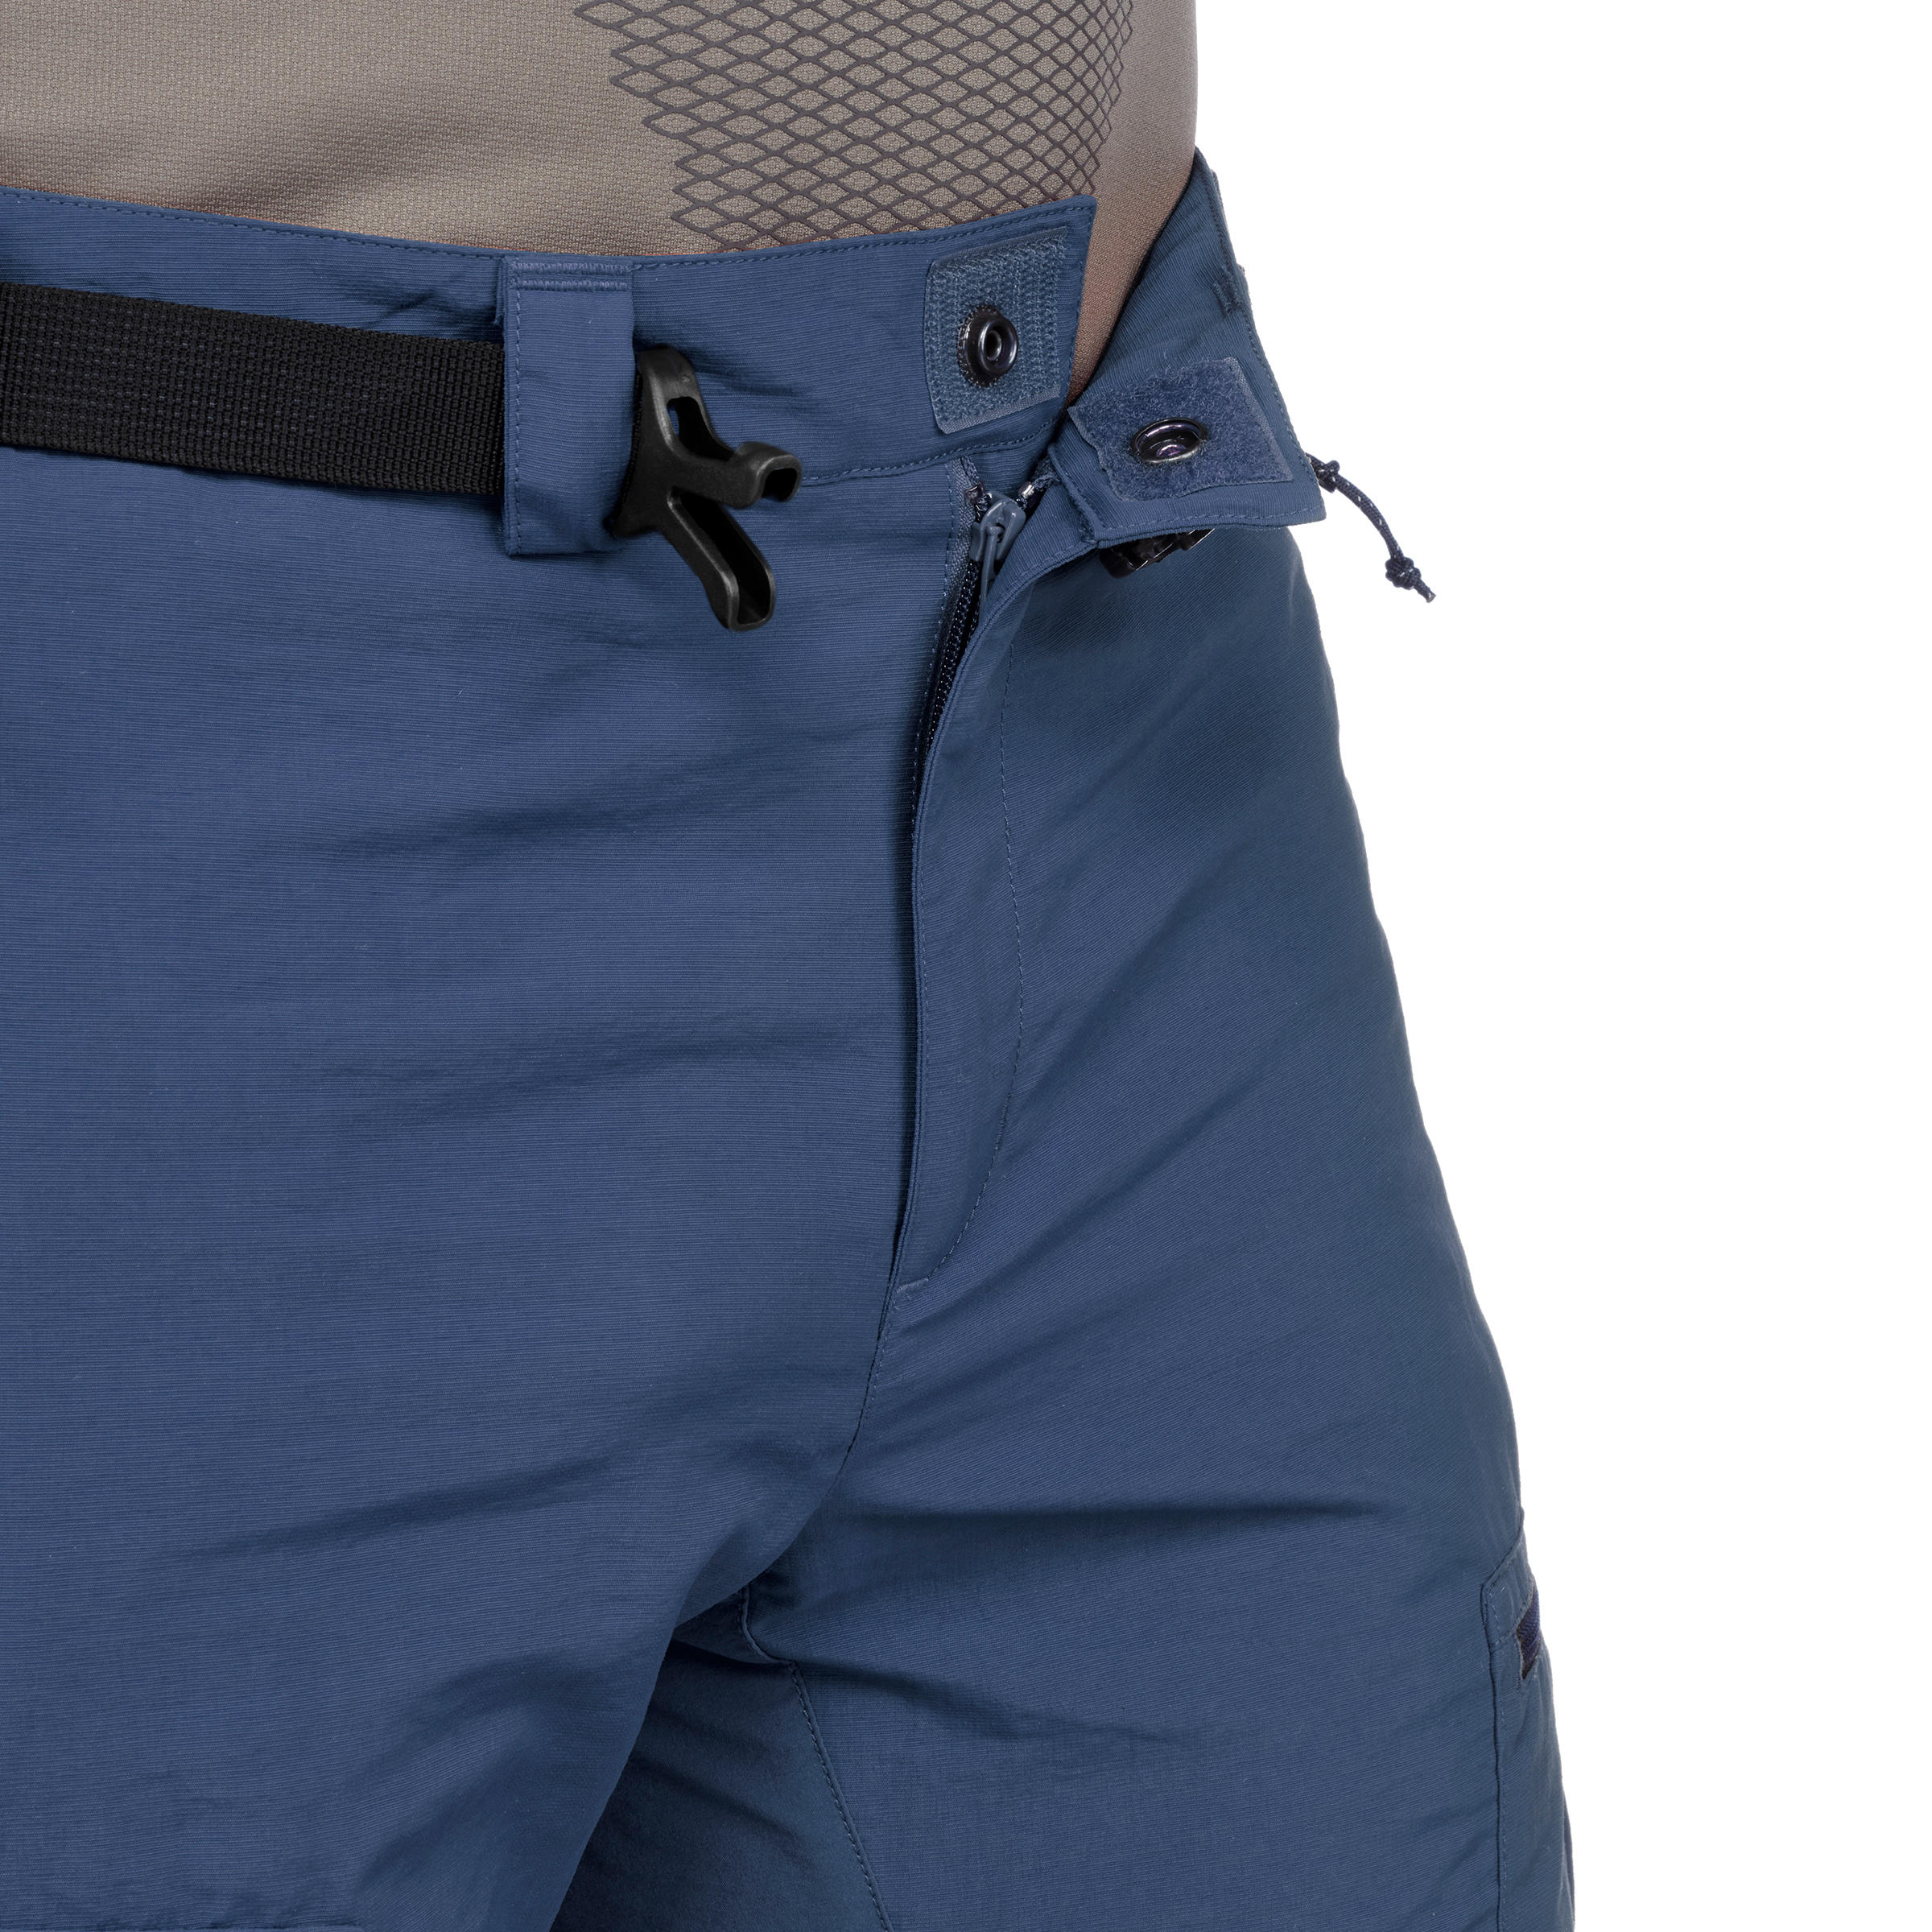 Men's Mountain Trekking Trousers -TREK 500 - Blue 7/11